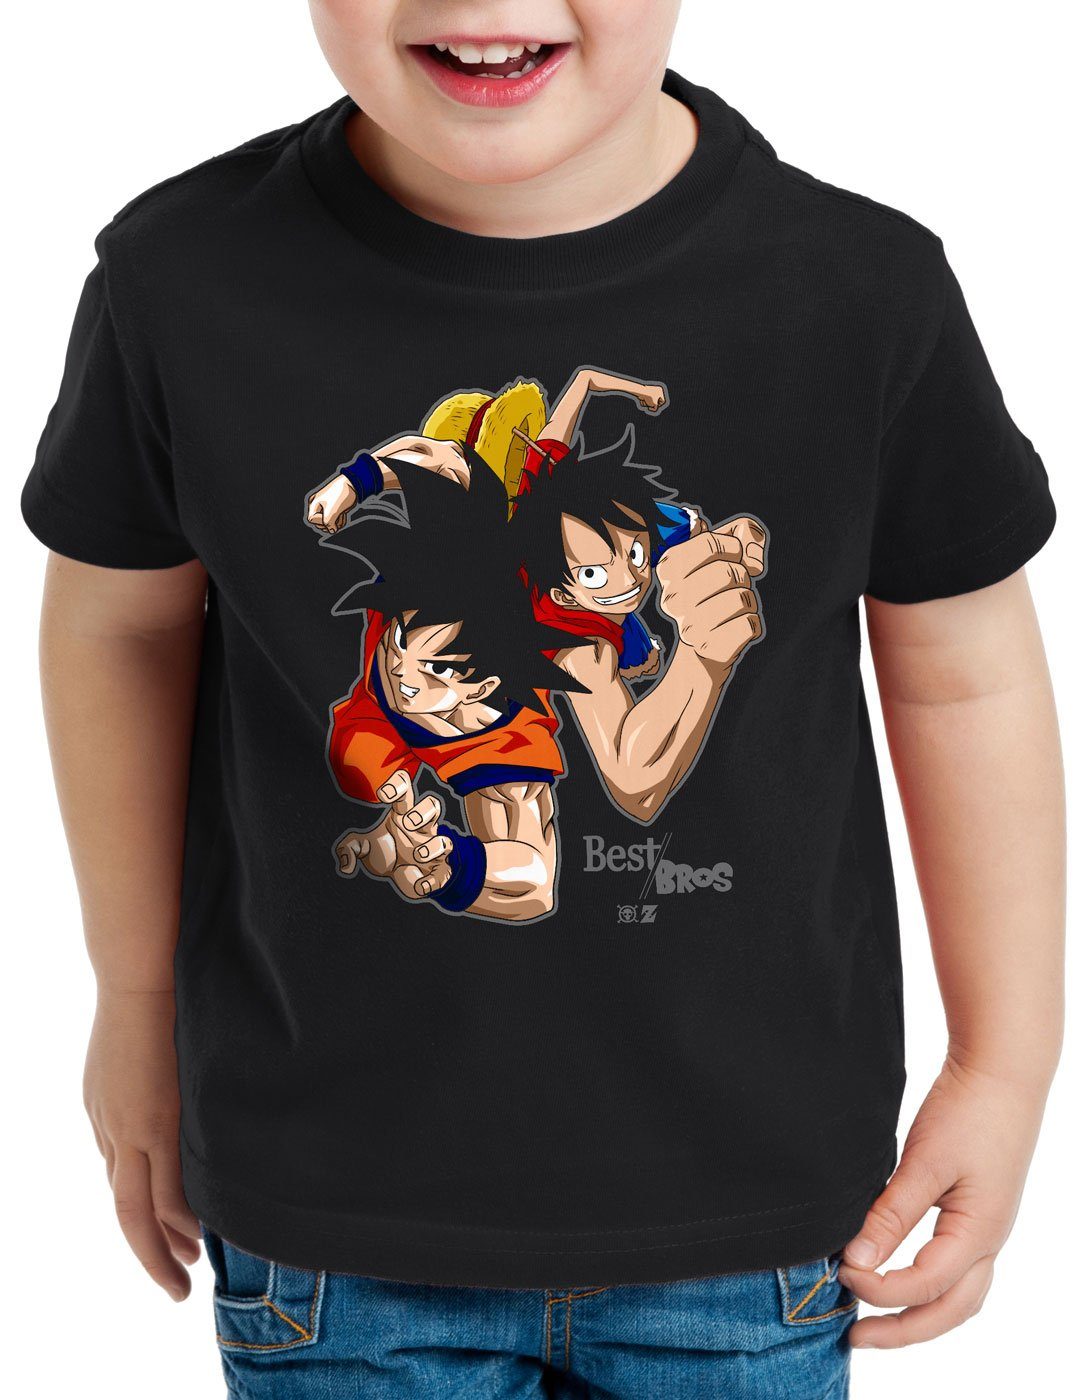 Top-Verkaufskonzept style3 Print-Shirt Kinder T-Shirt Best schwarz Goku - strohhut Ruffy z saiyan Bro's